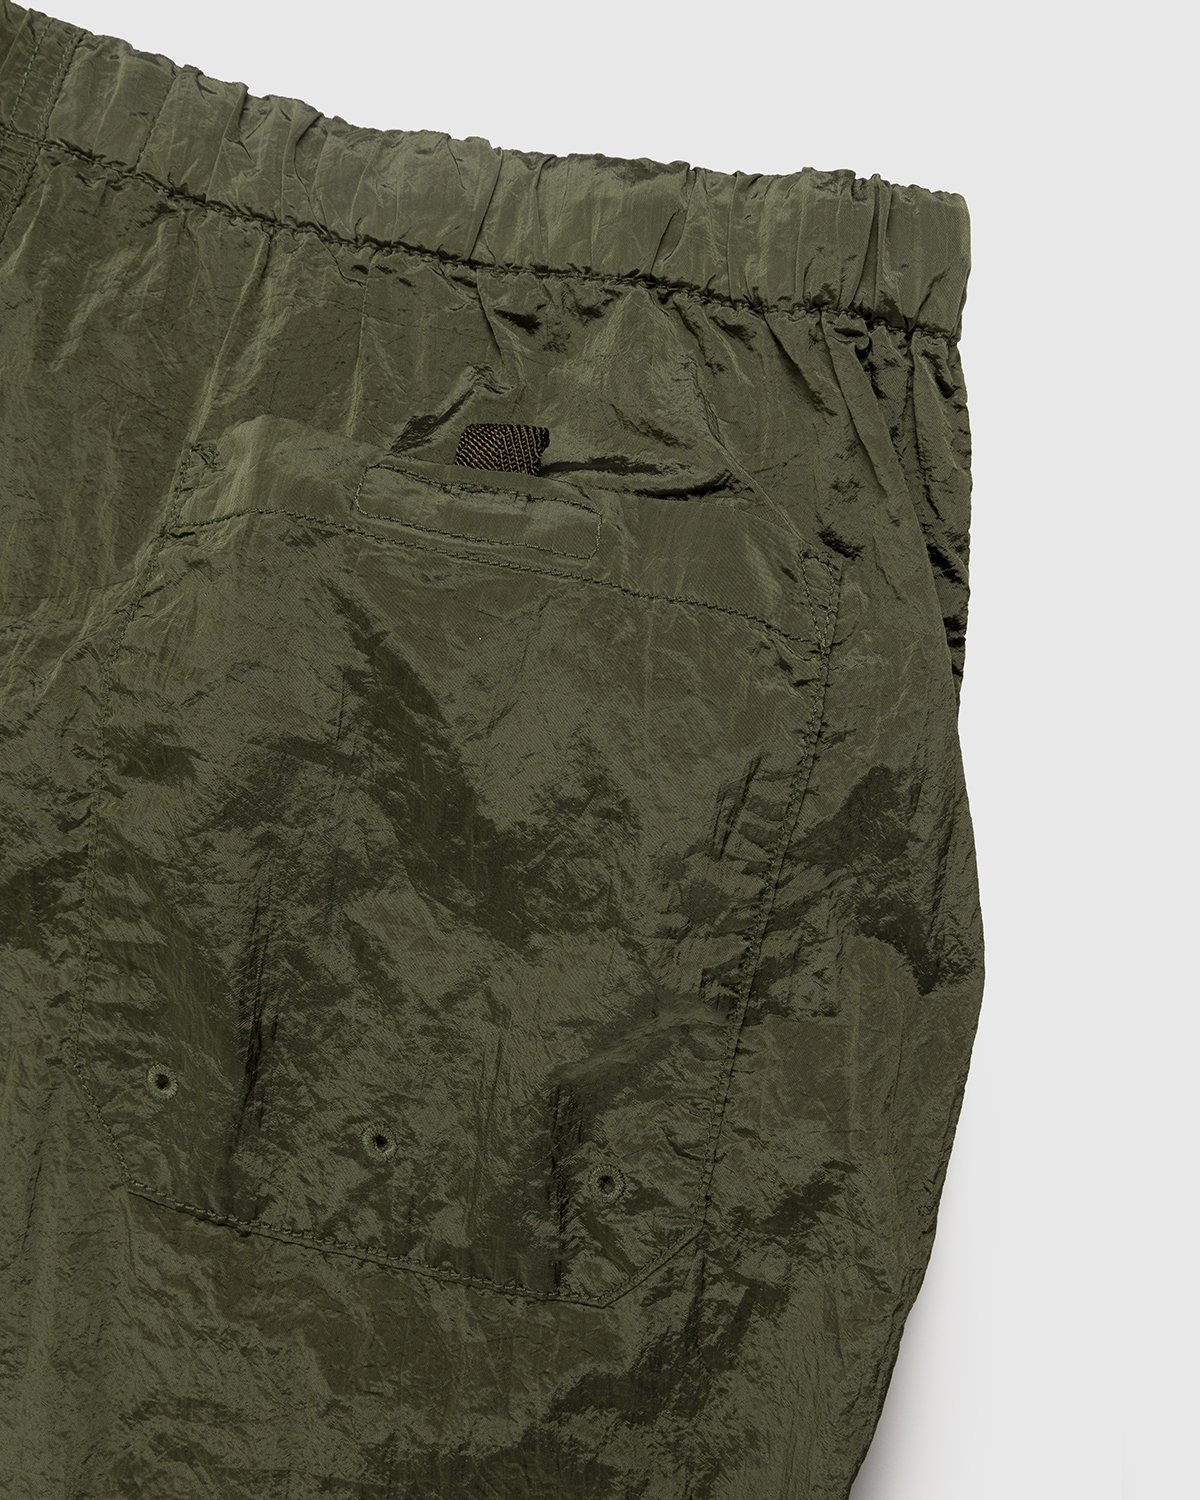 Stone Island - B0643 Nylon Metal Bermuda Shorts Olive - Clothing - Green - Image 3